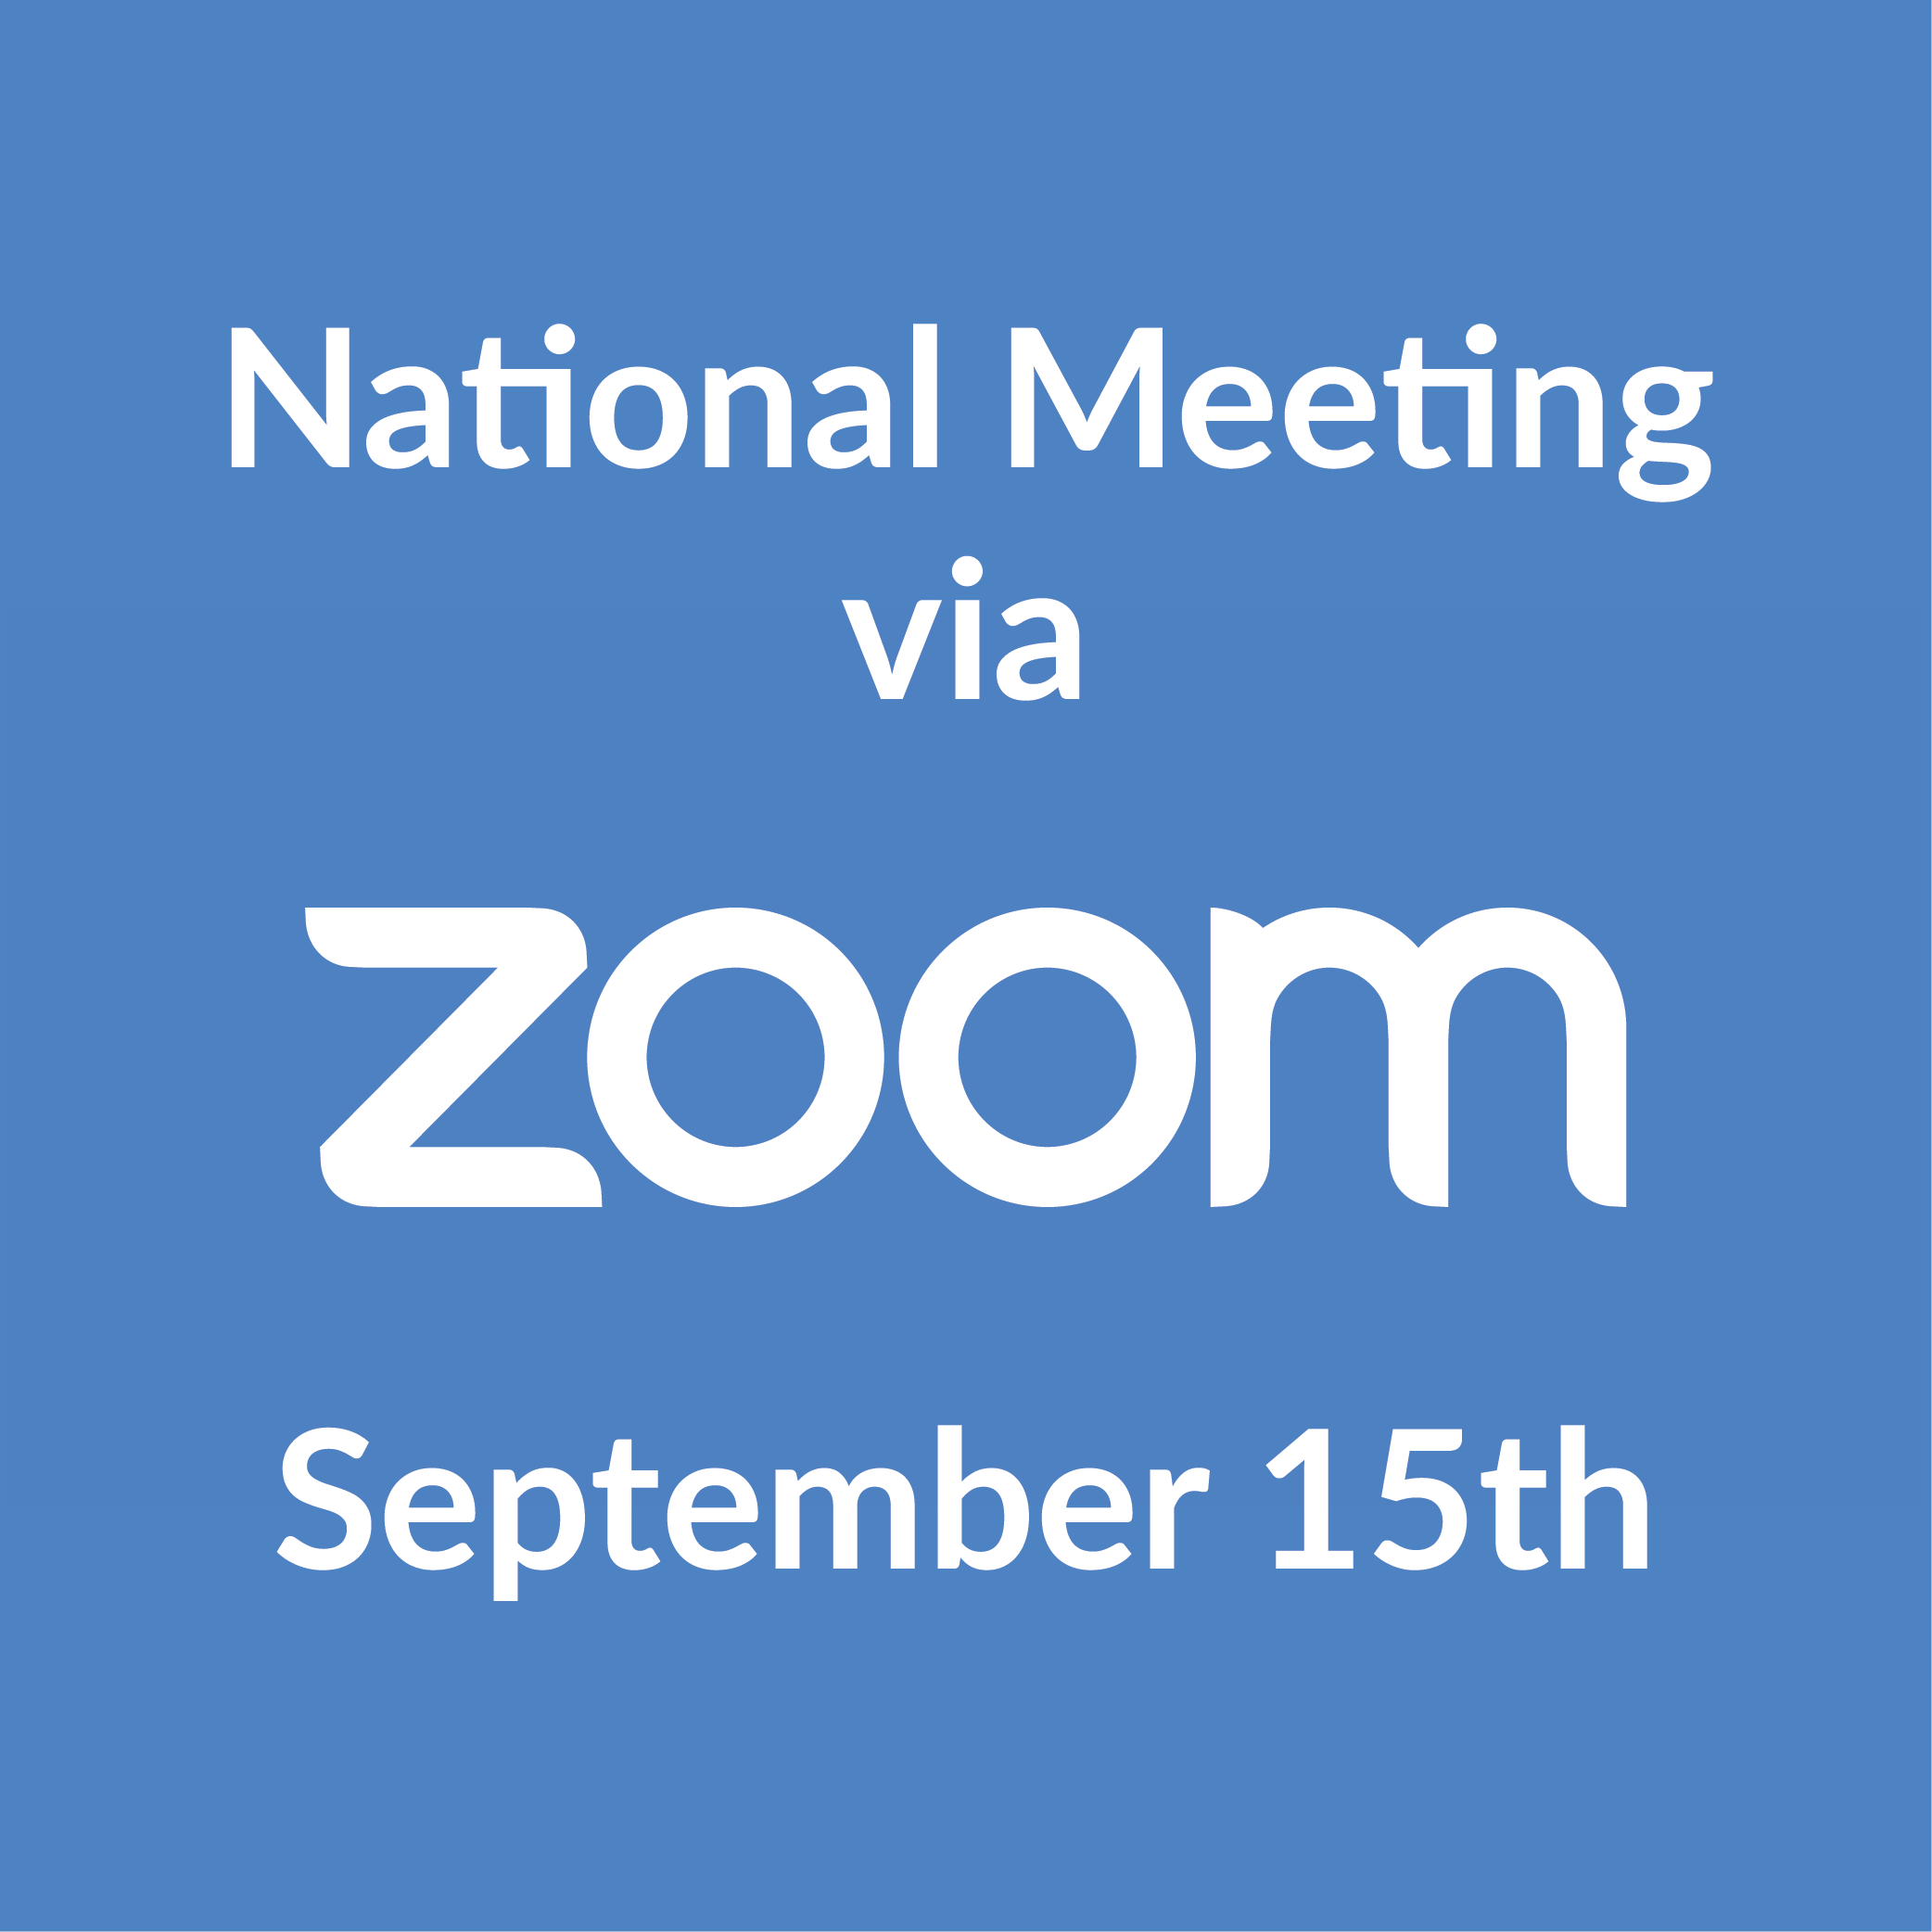 National Meeting via Zoom - September 15th - Circus Saints & Sinners